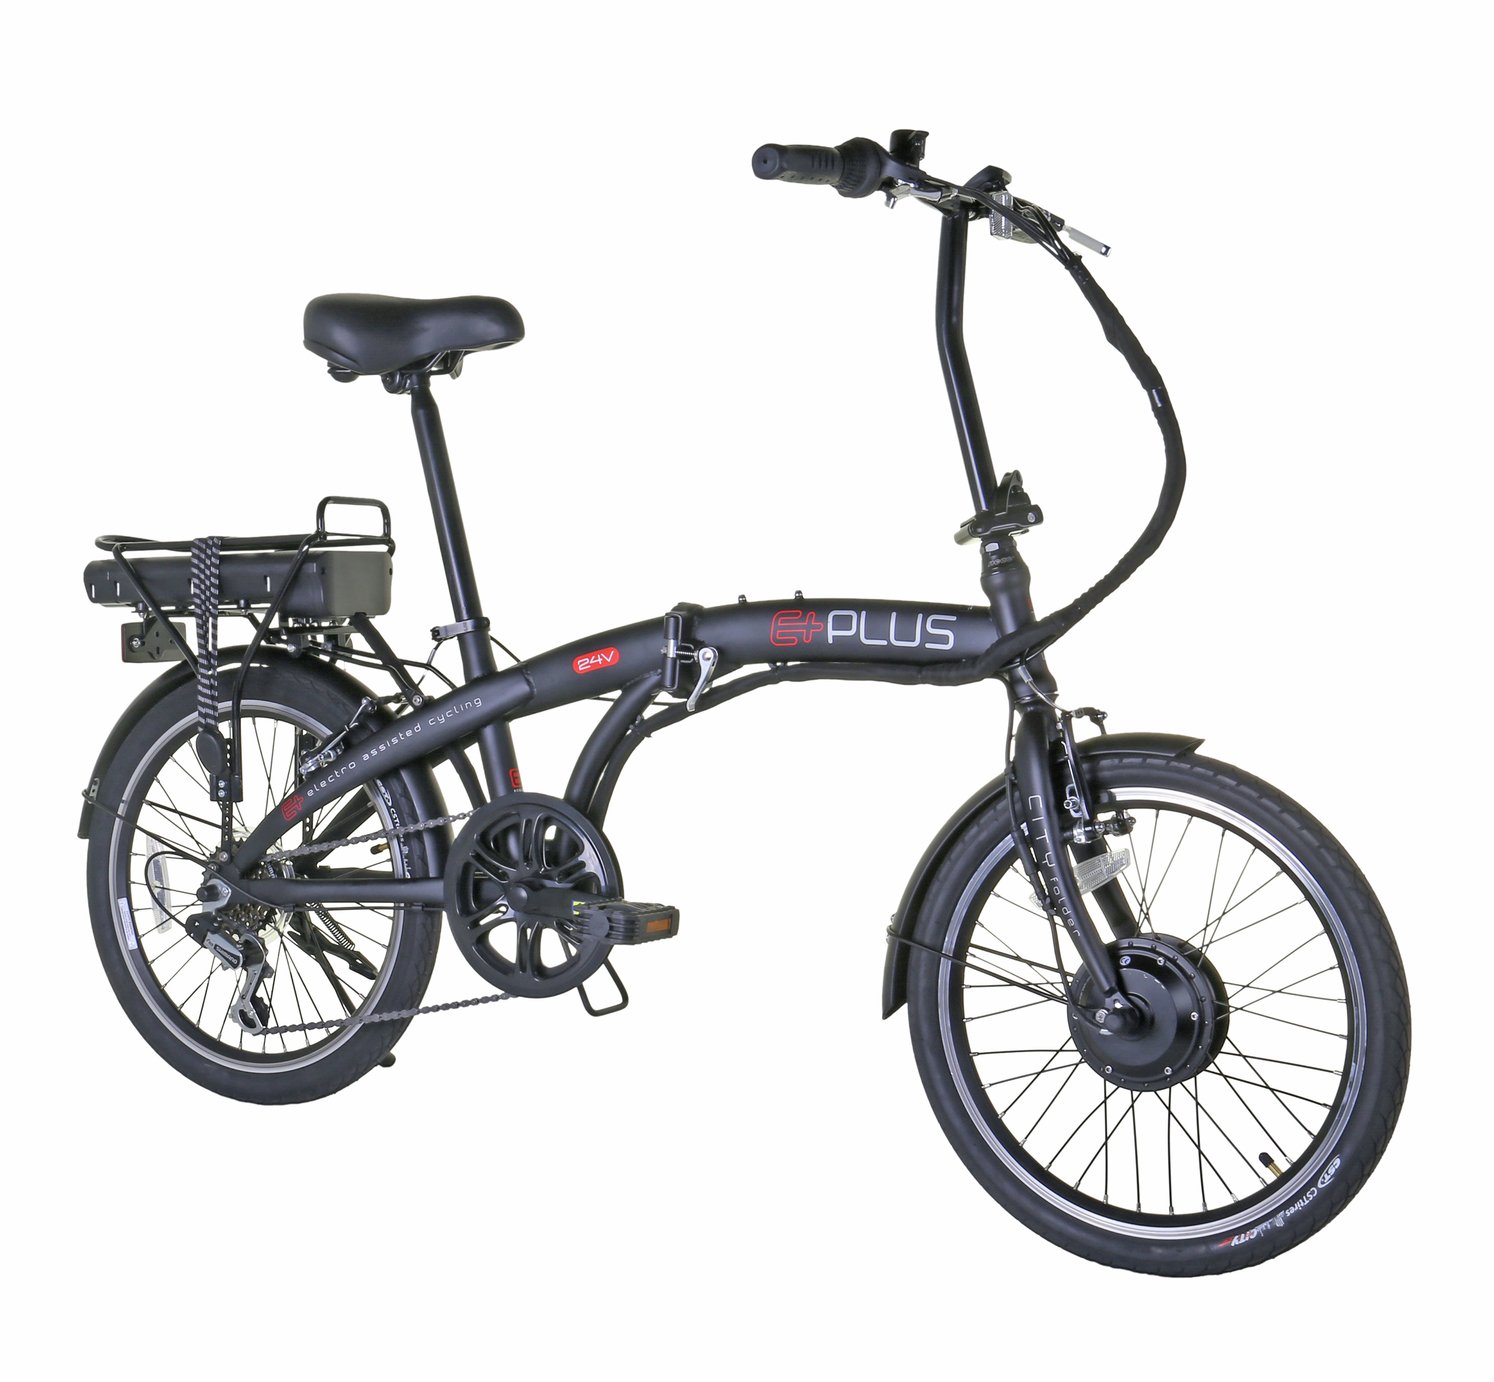 E-Plus 20 inch Wheel Size Unisex Folding Electric Bike Review